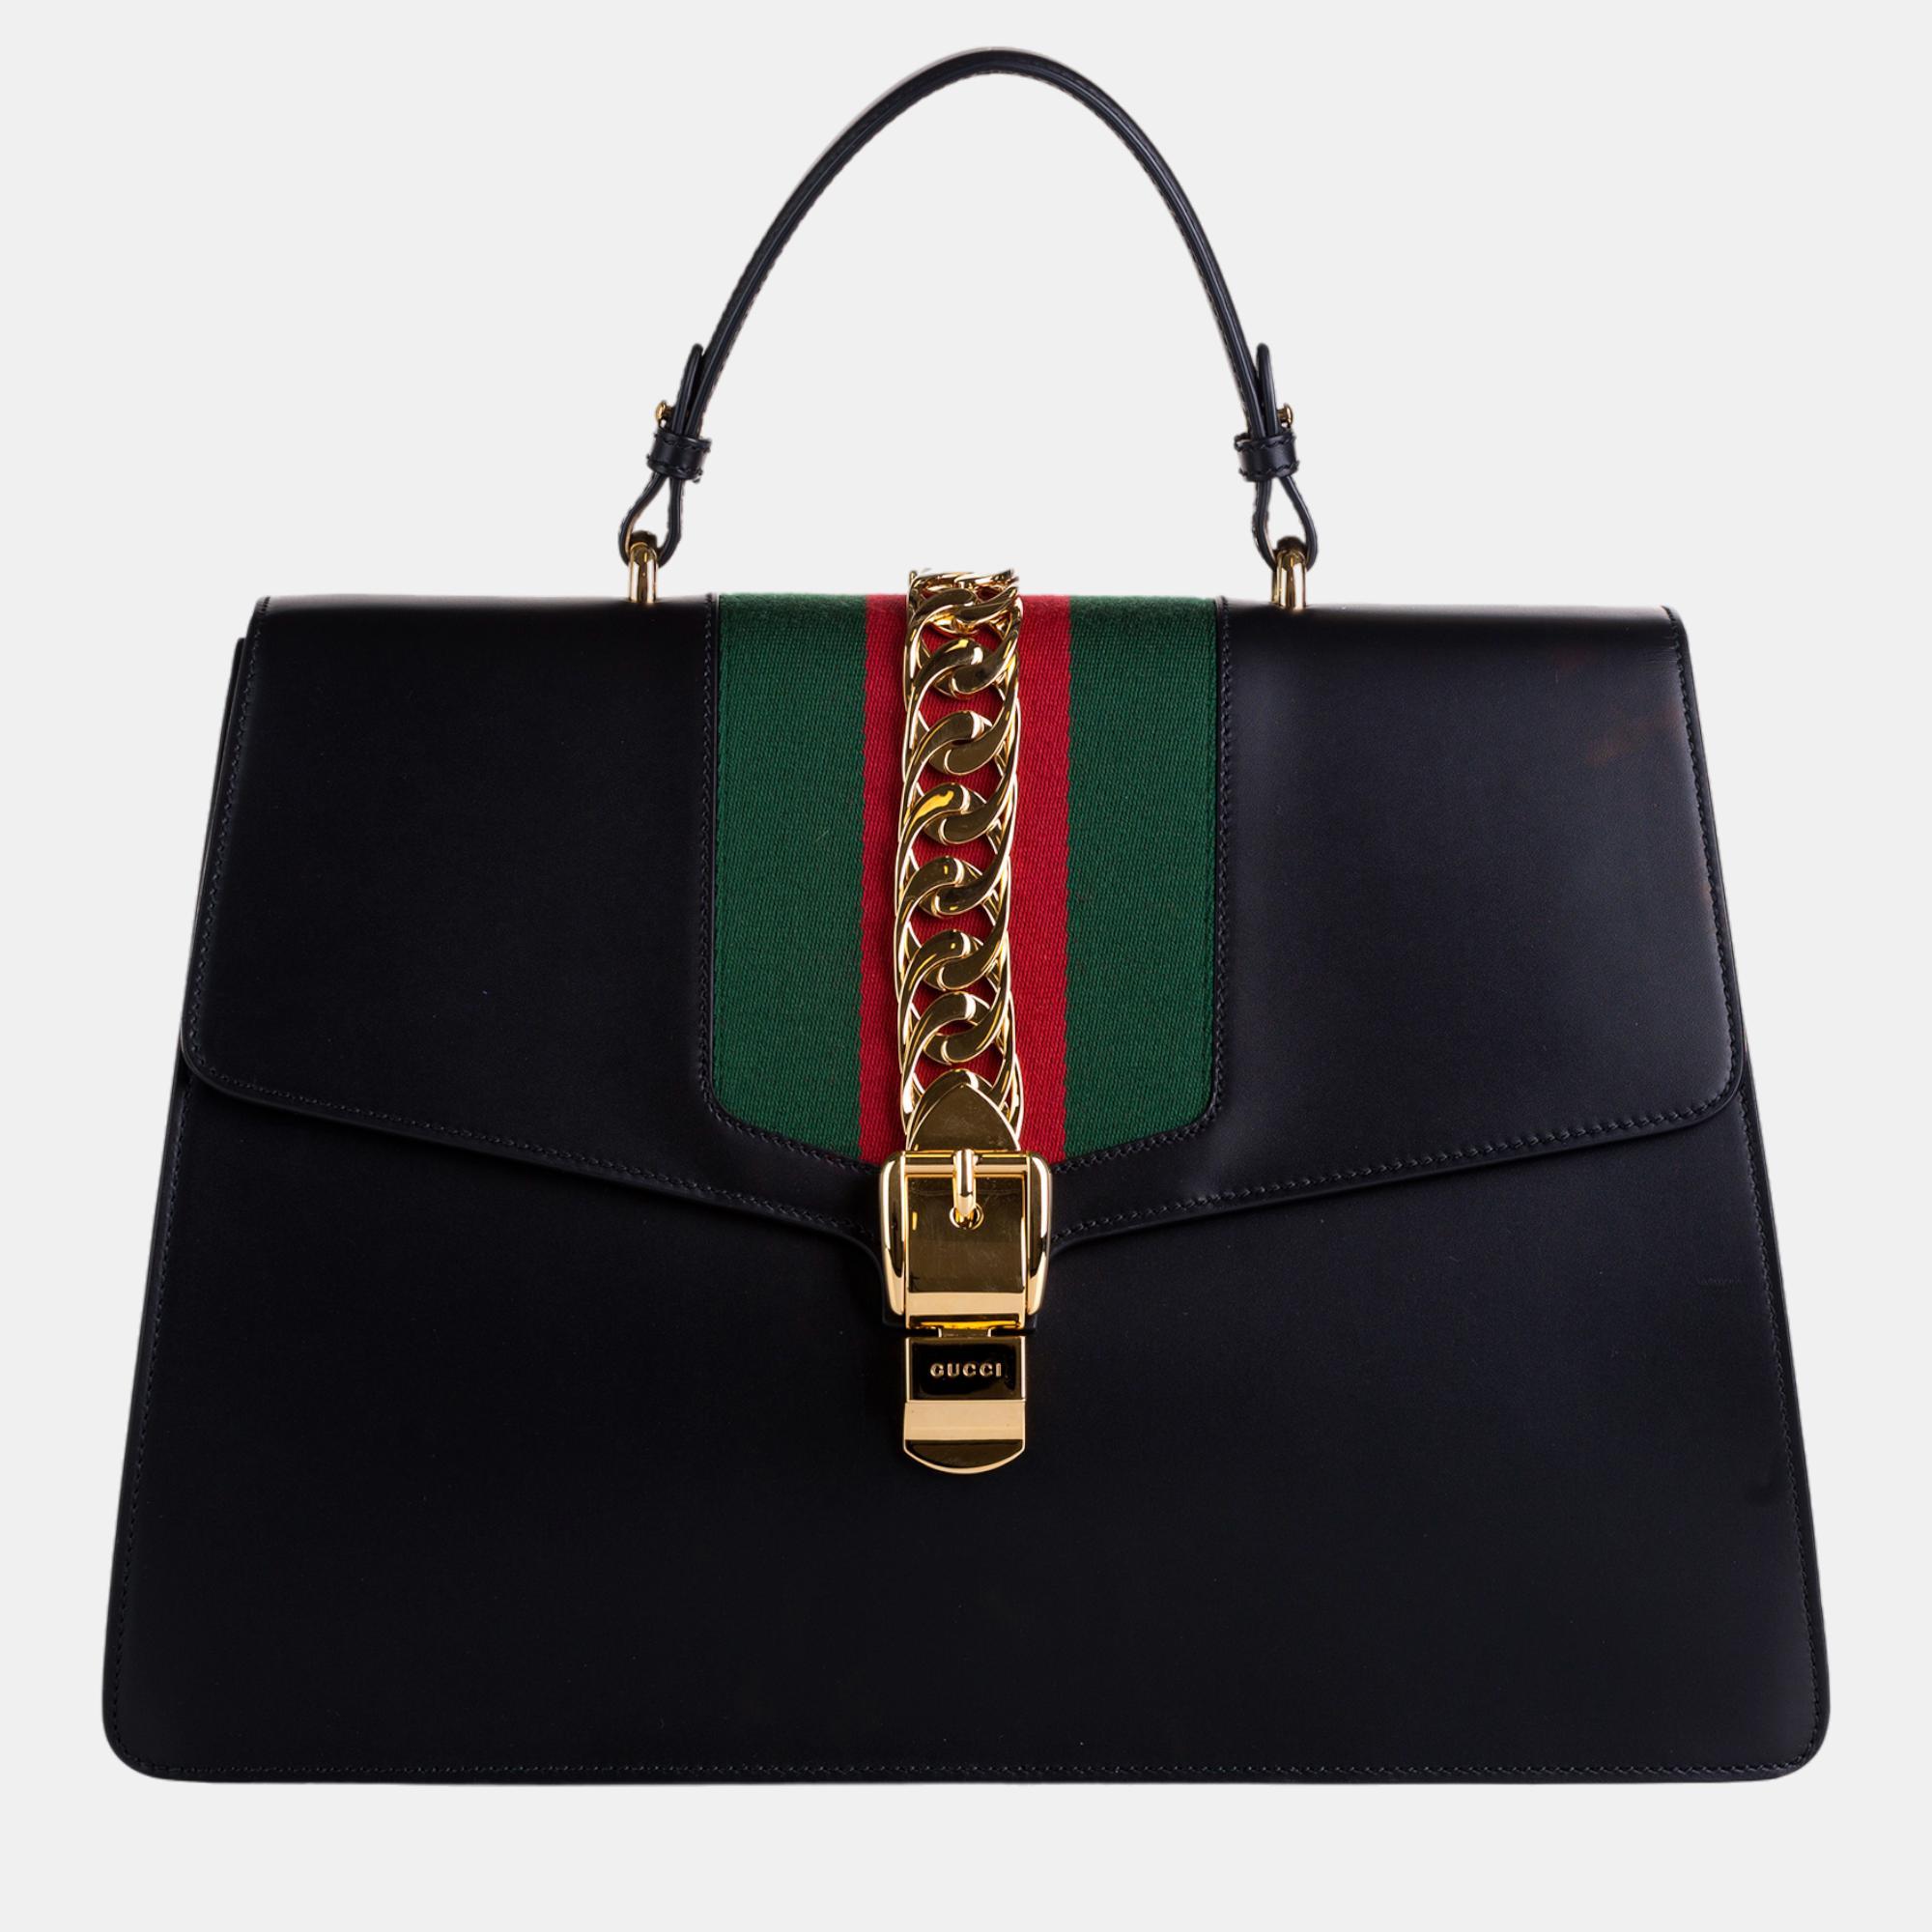 Gucci black sylvie web satchel